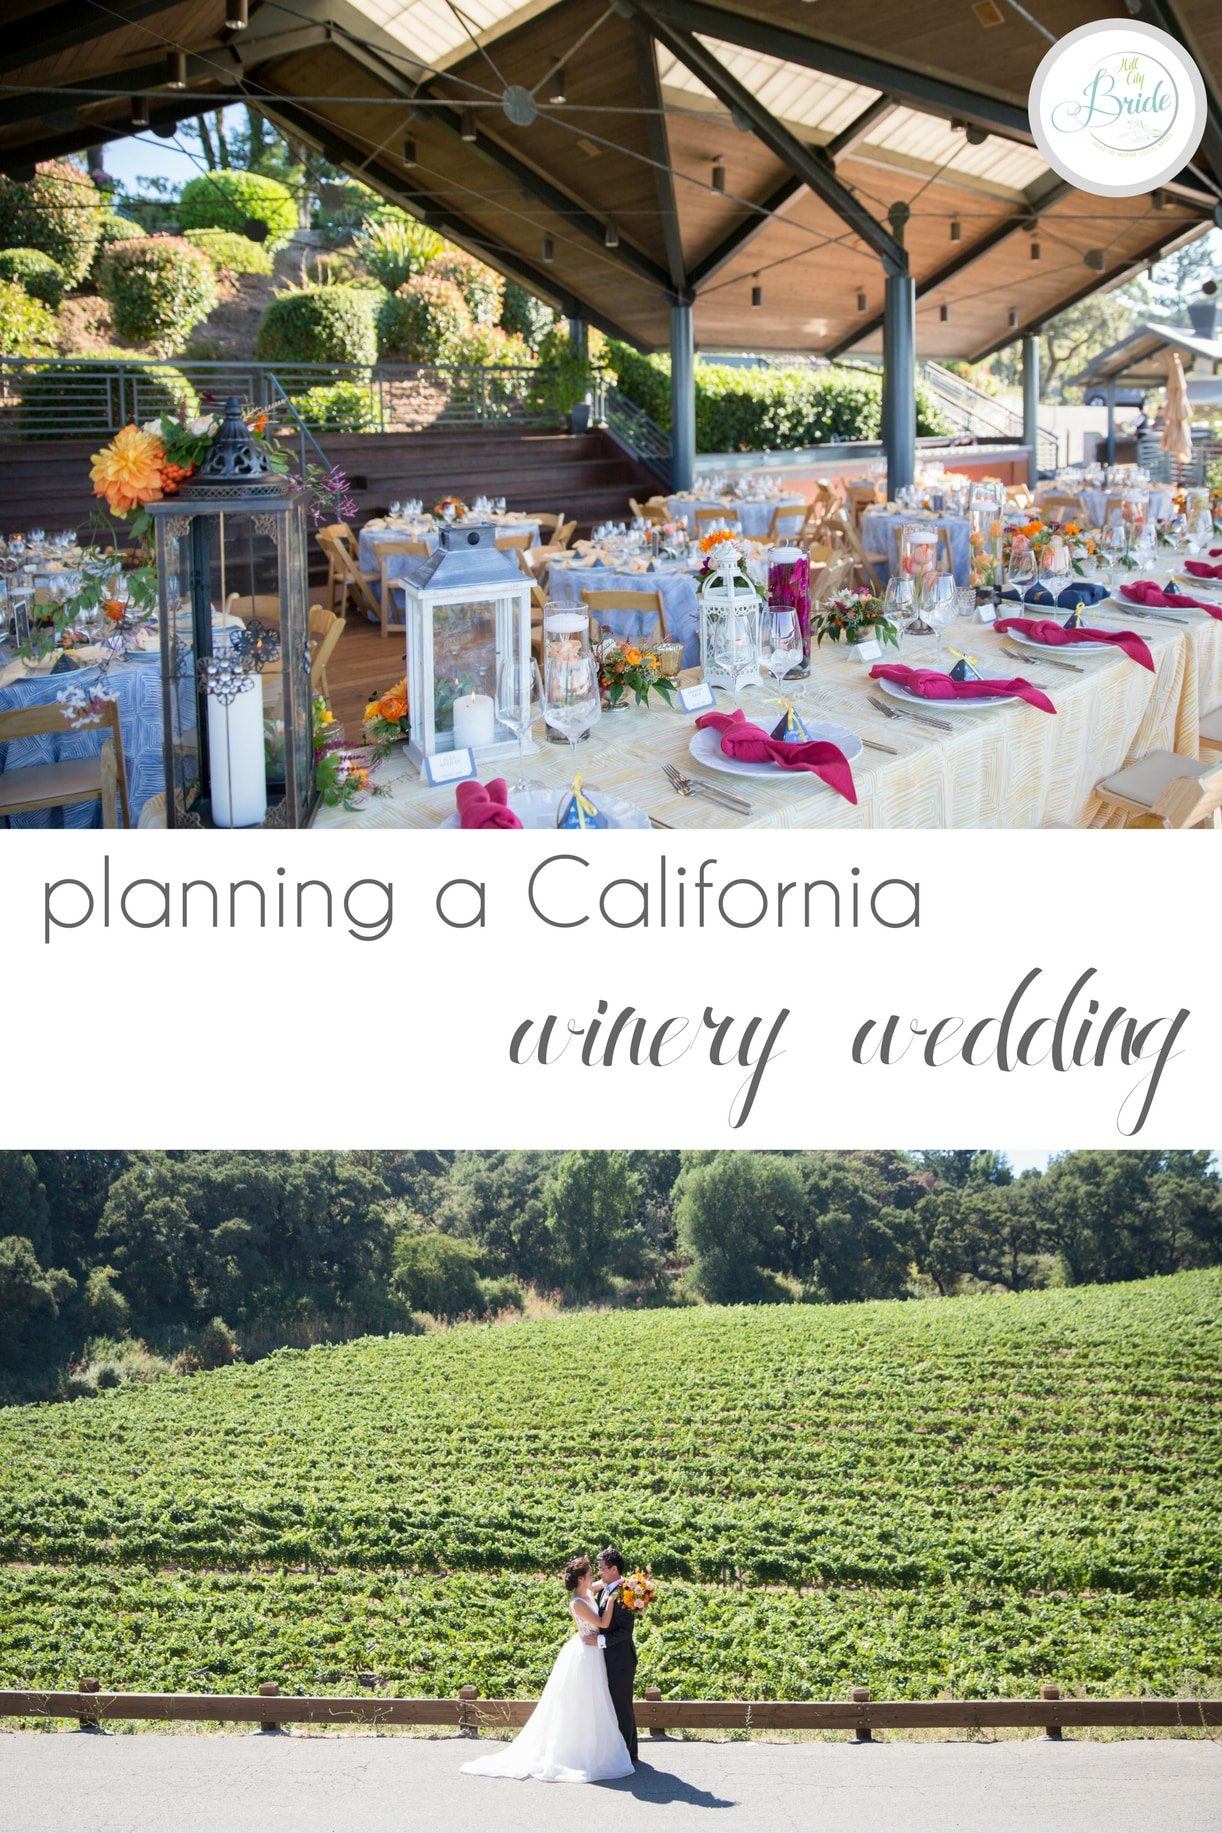 Planning a California Winery Wedding as seen on Hill City Bride Virginia Wedding Blog - San Mateo County Silicon Valley